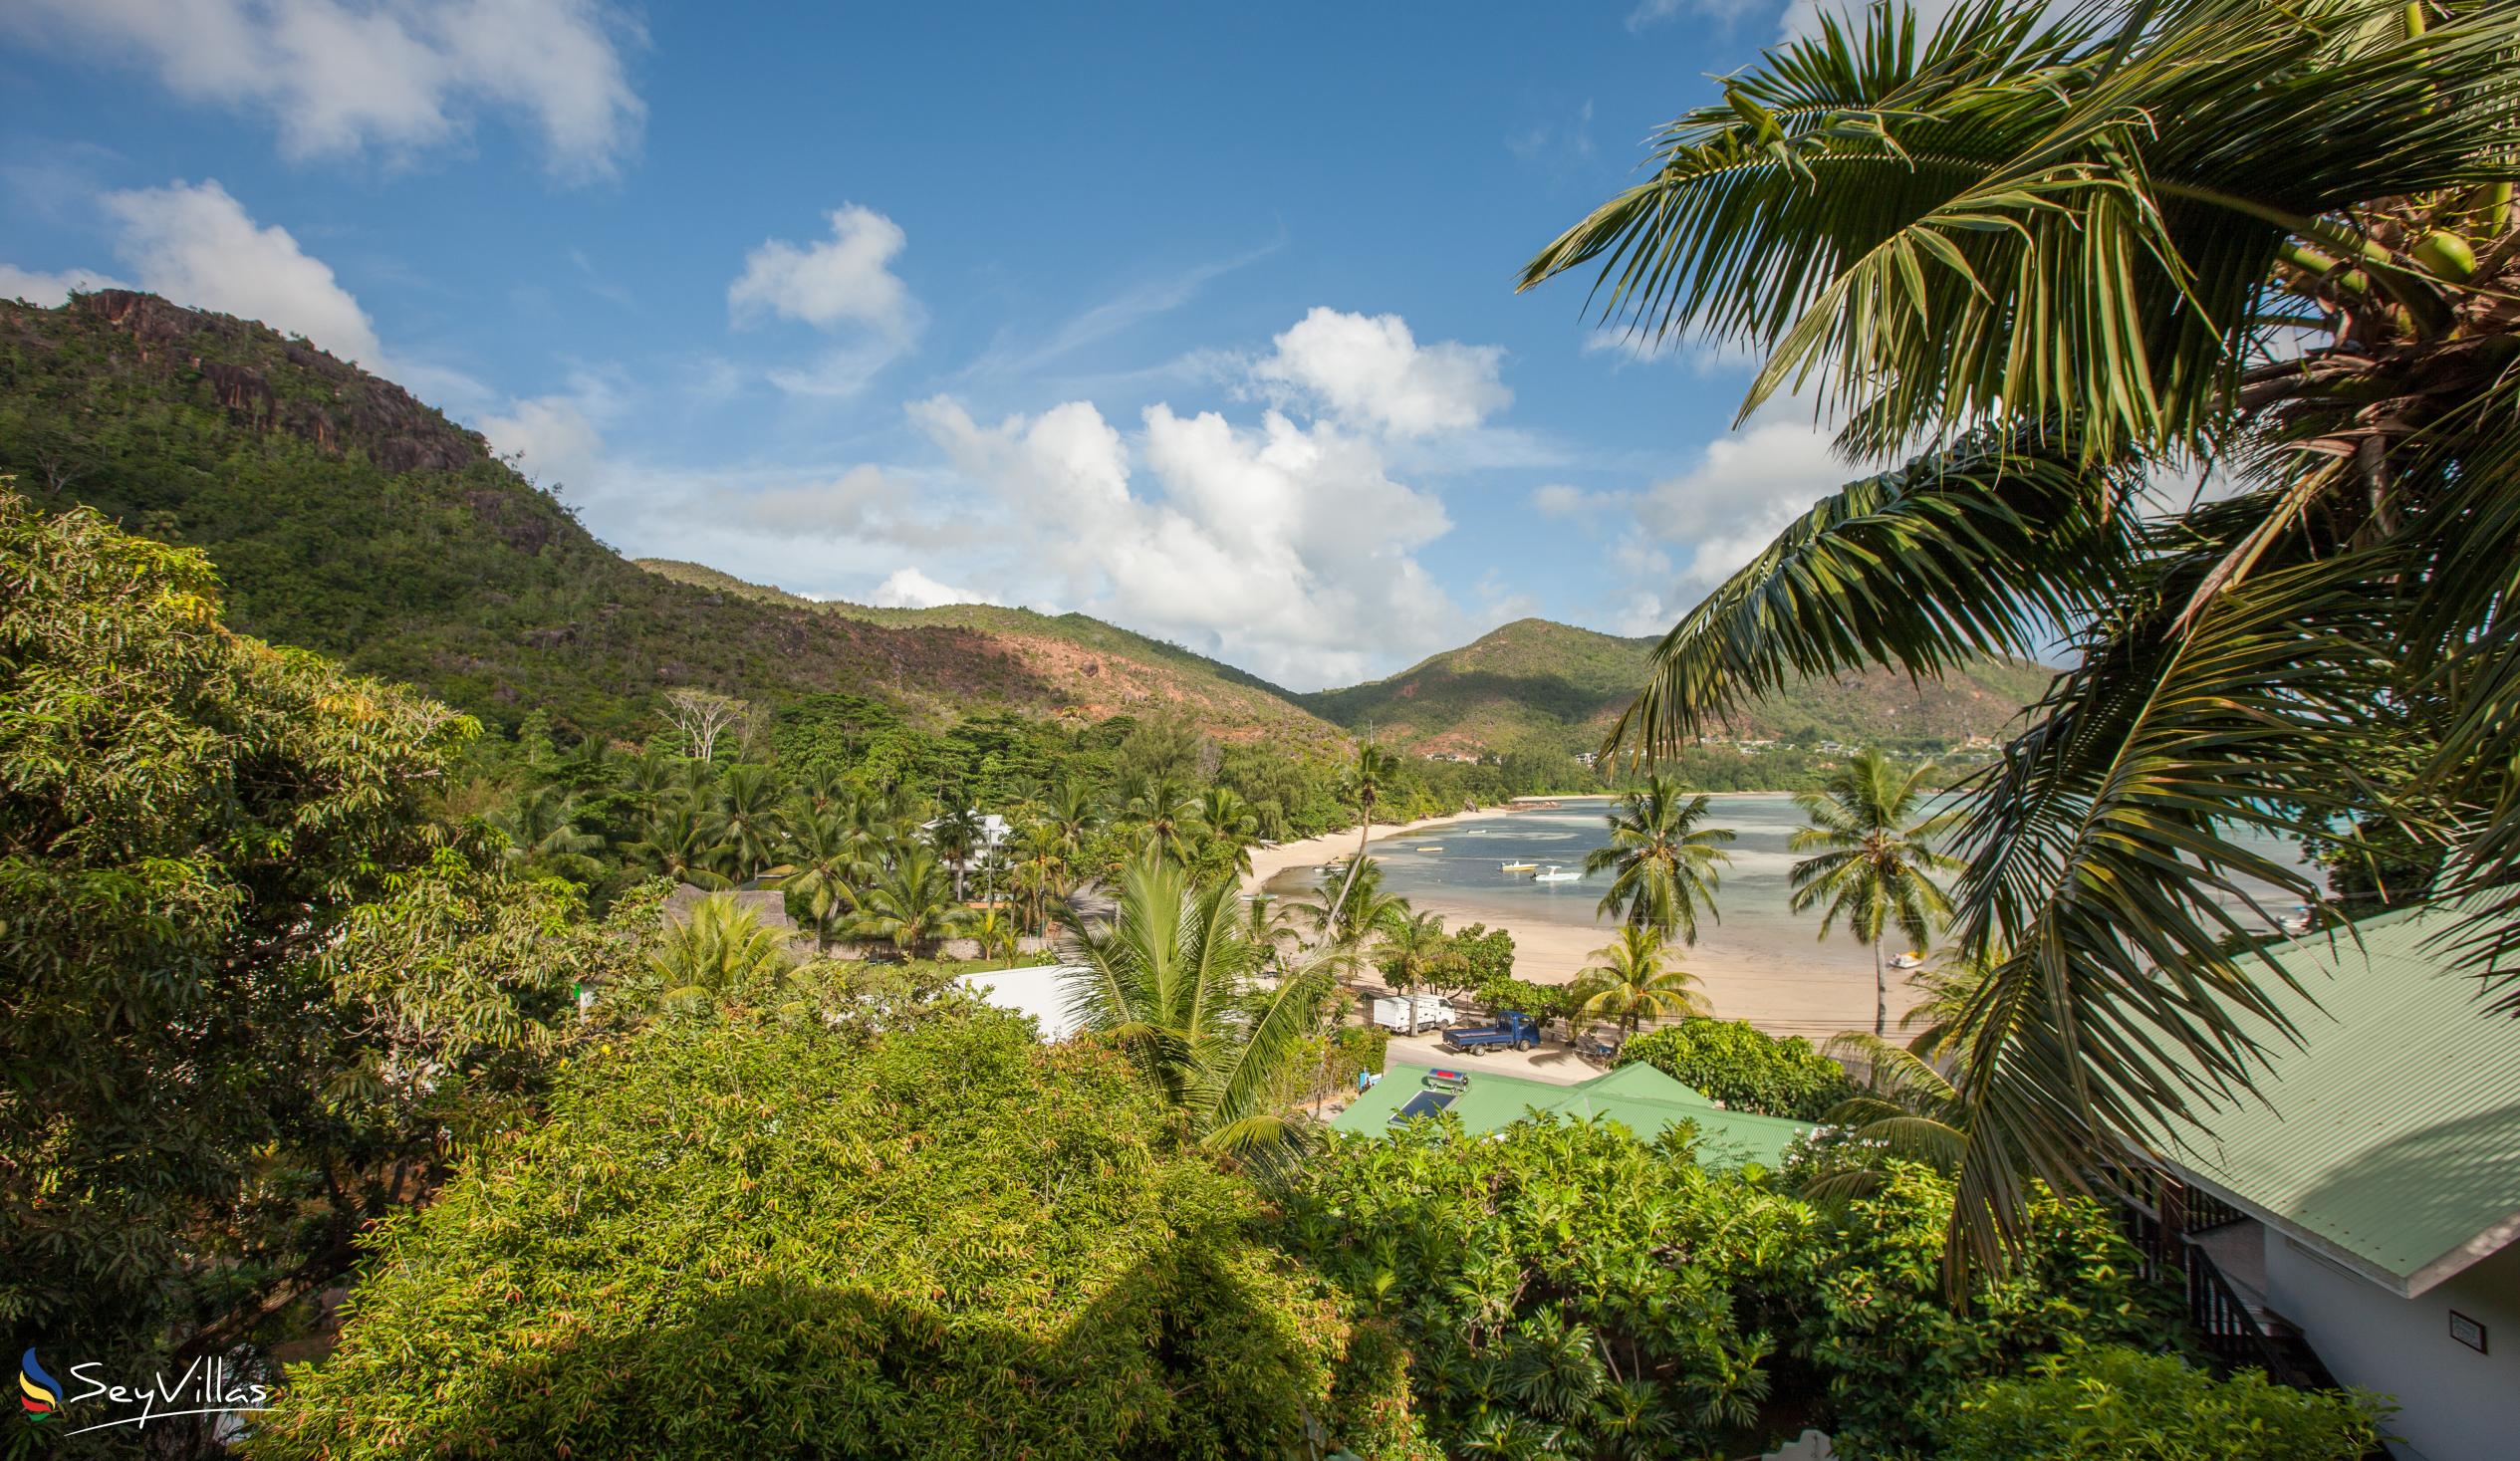 Foto 23: Sea View Lodge - Posizione - Praslin (Seychelles)